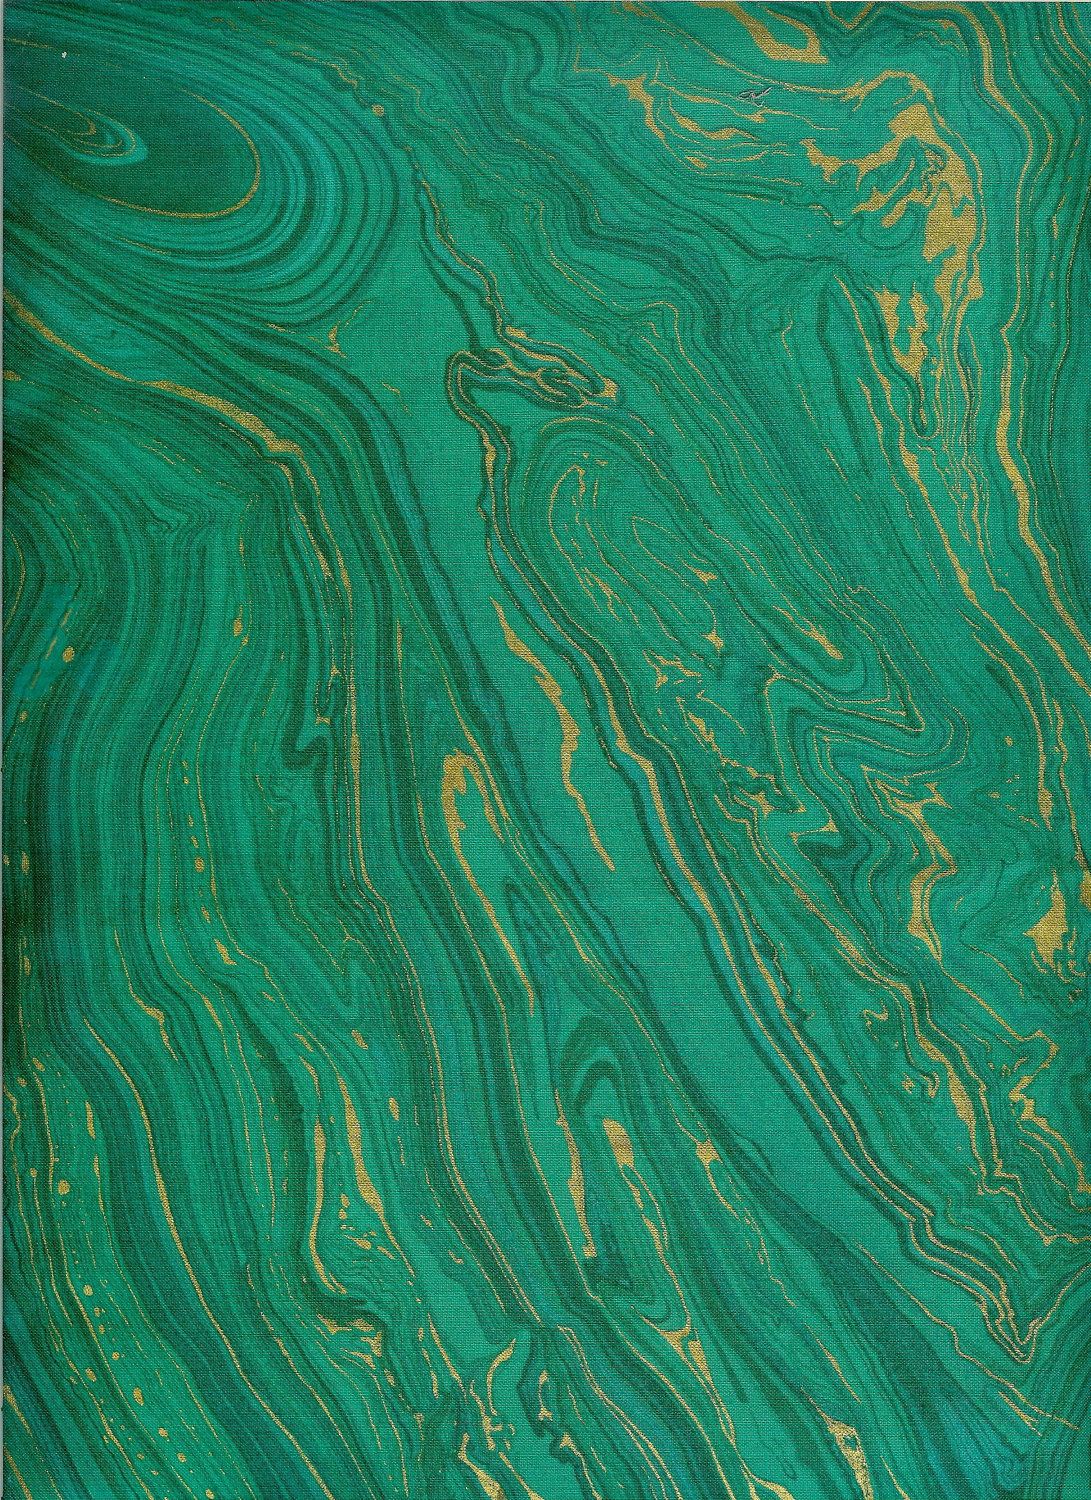 grüne marmortapete,aqua,grün,blau,türkis,blaugrün